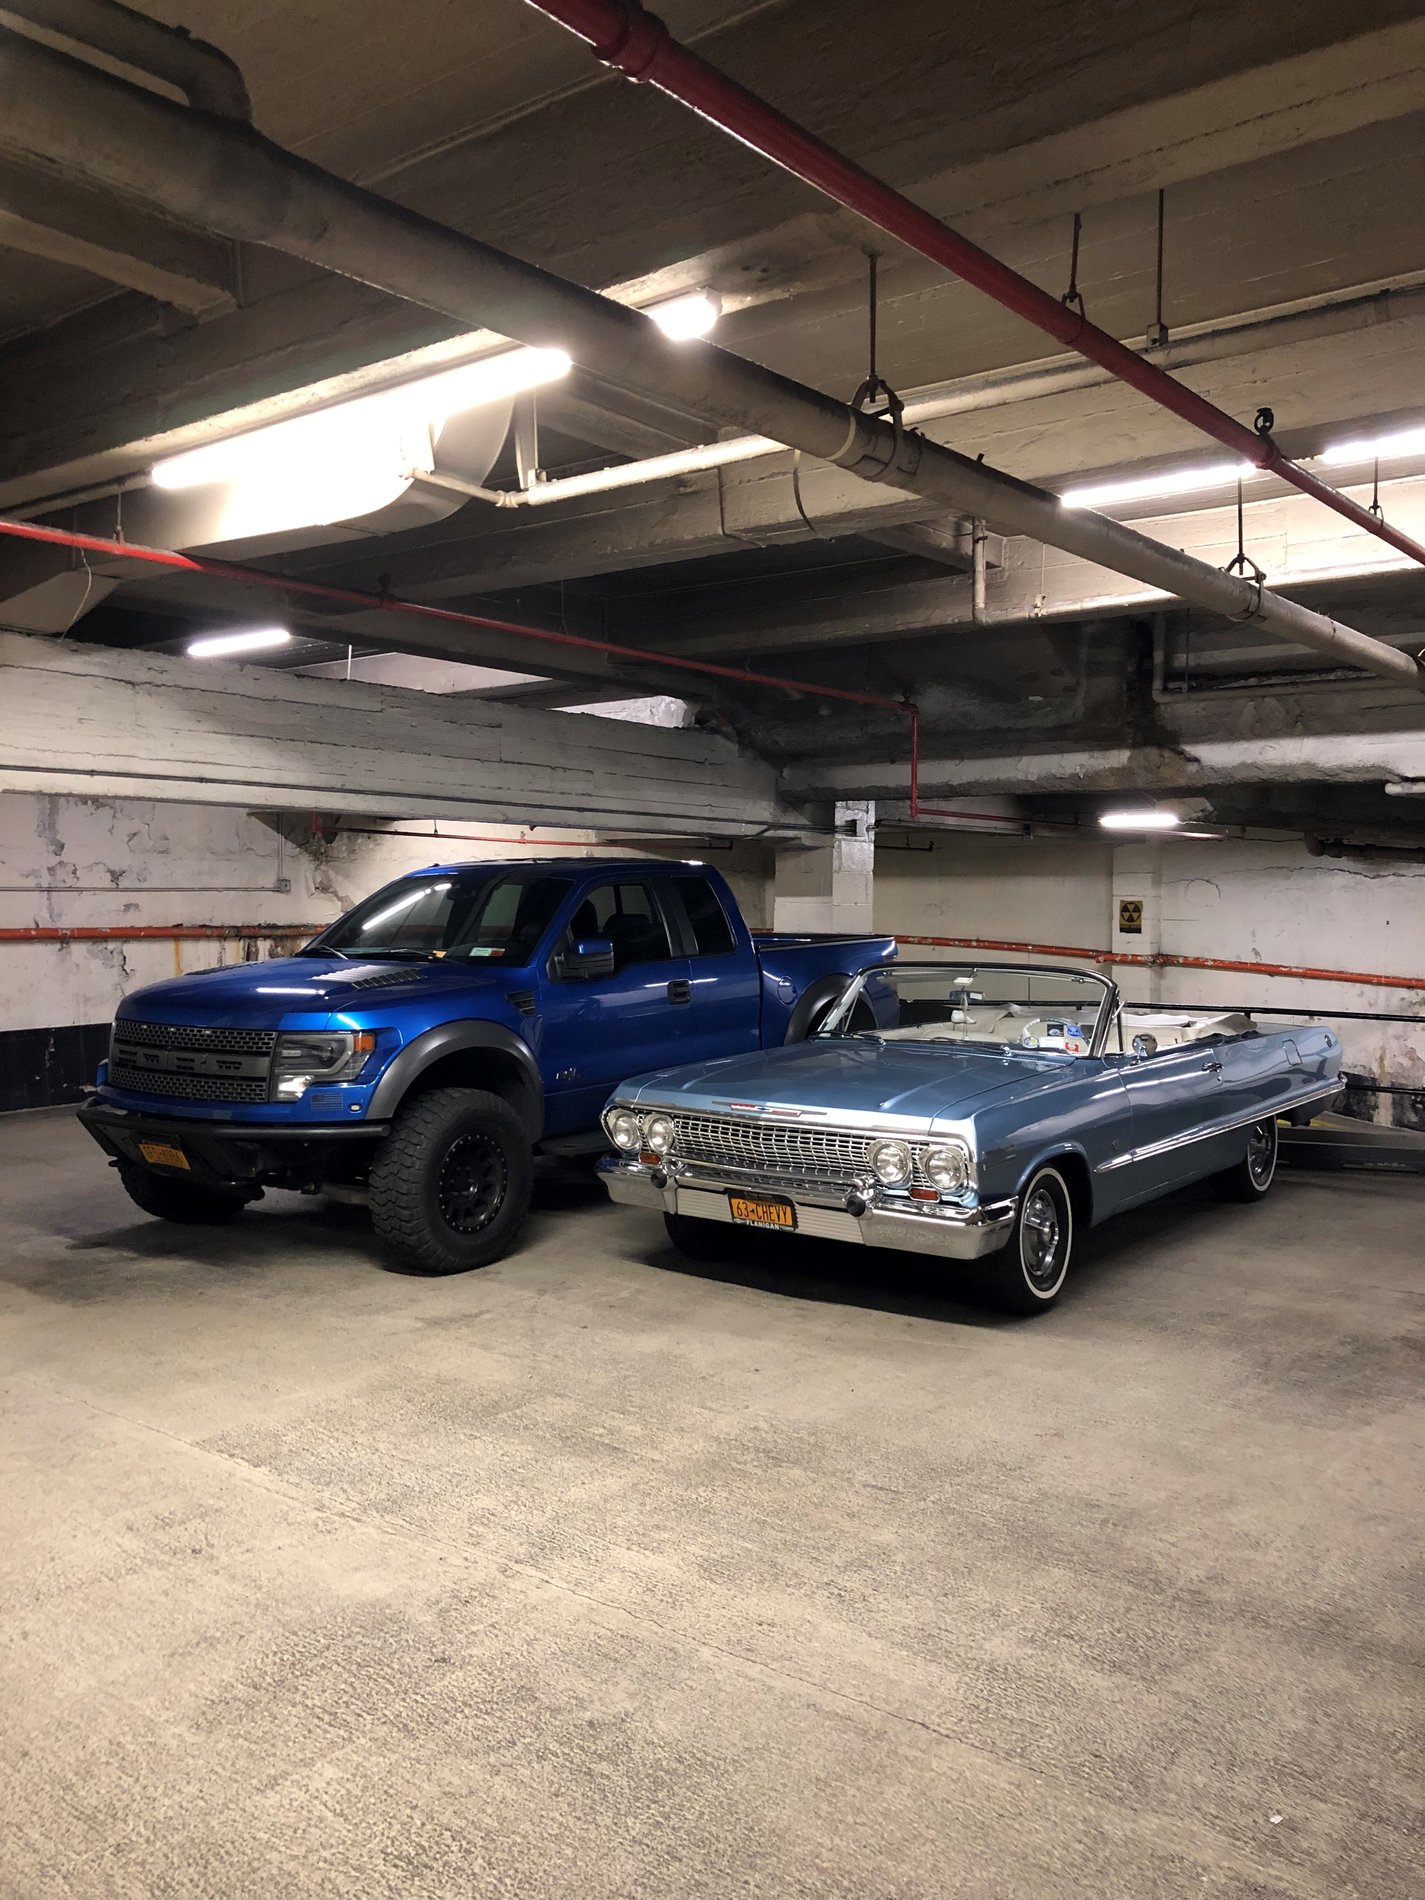 Ford Ranger Where do you park at work? lot